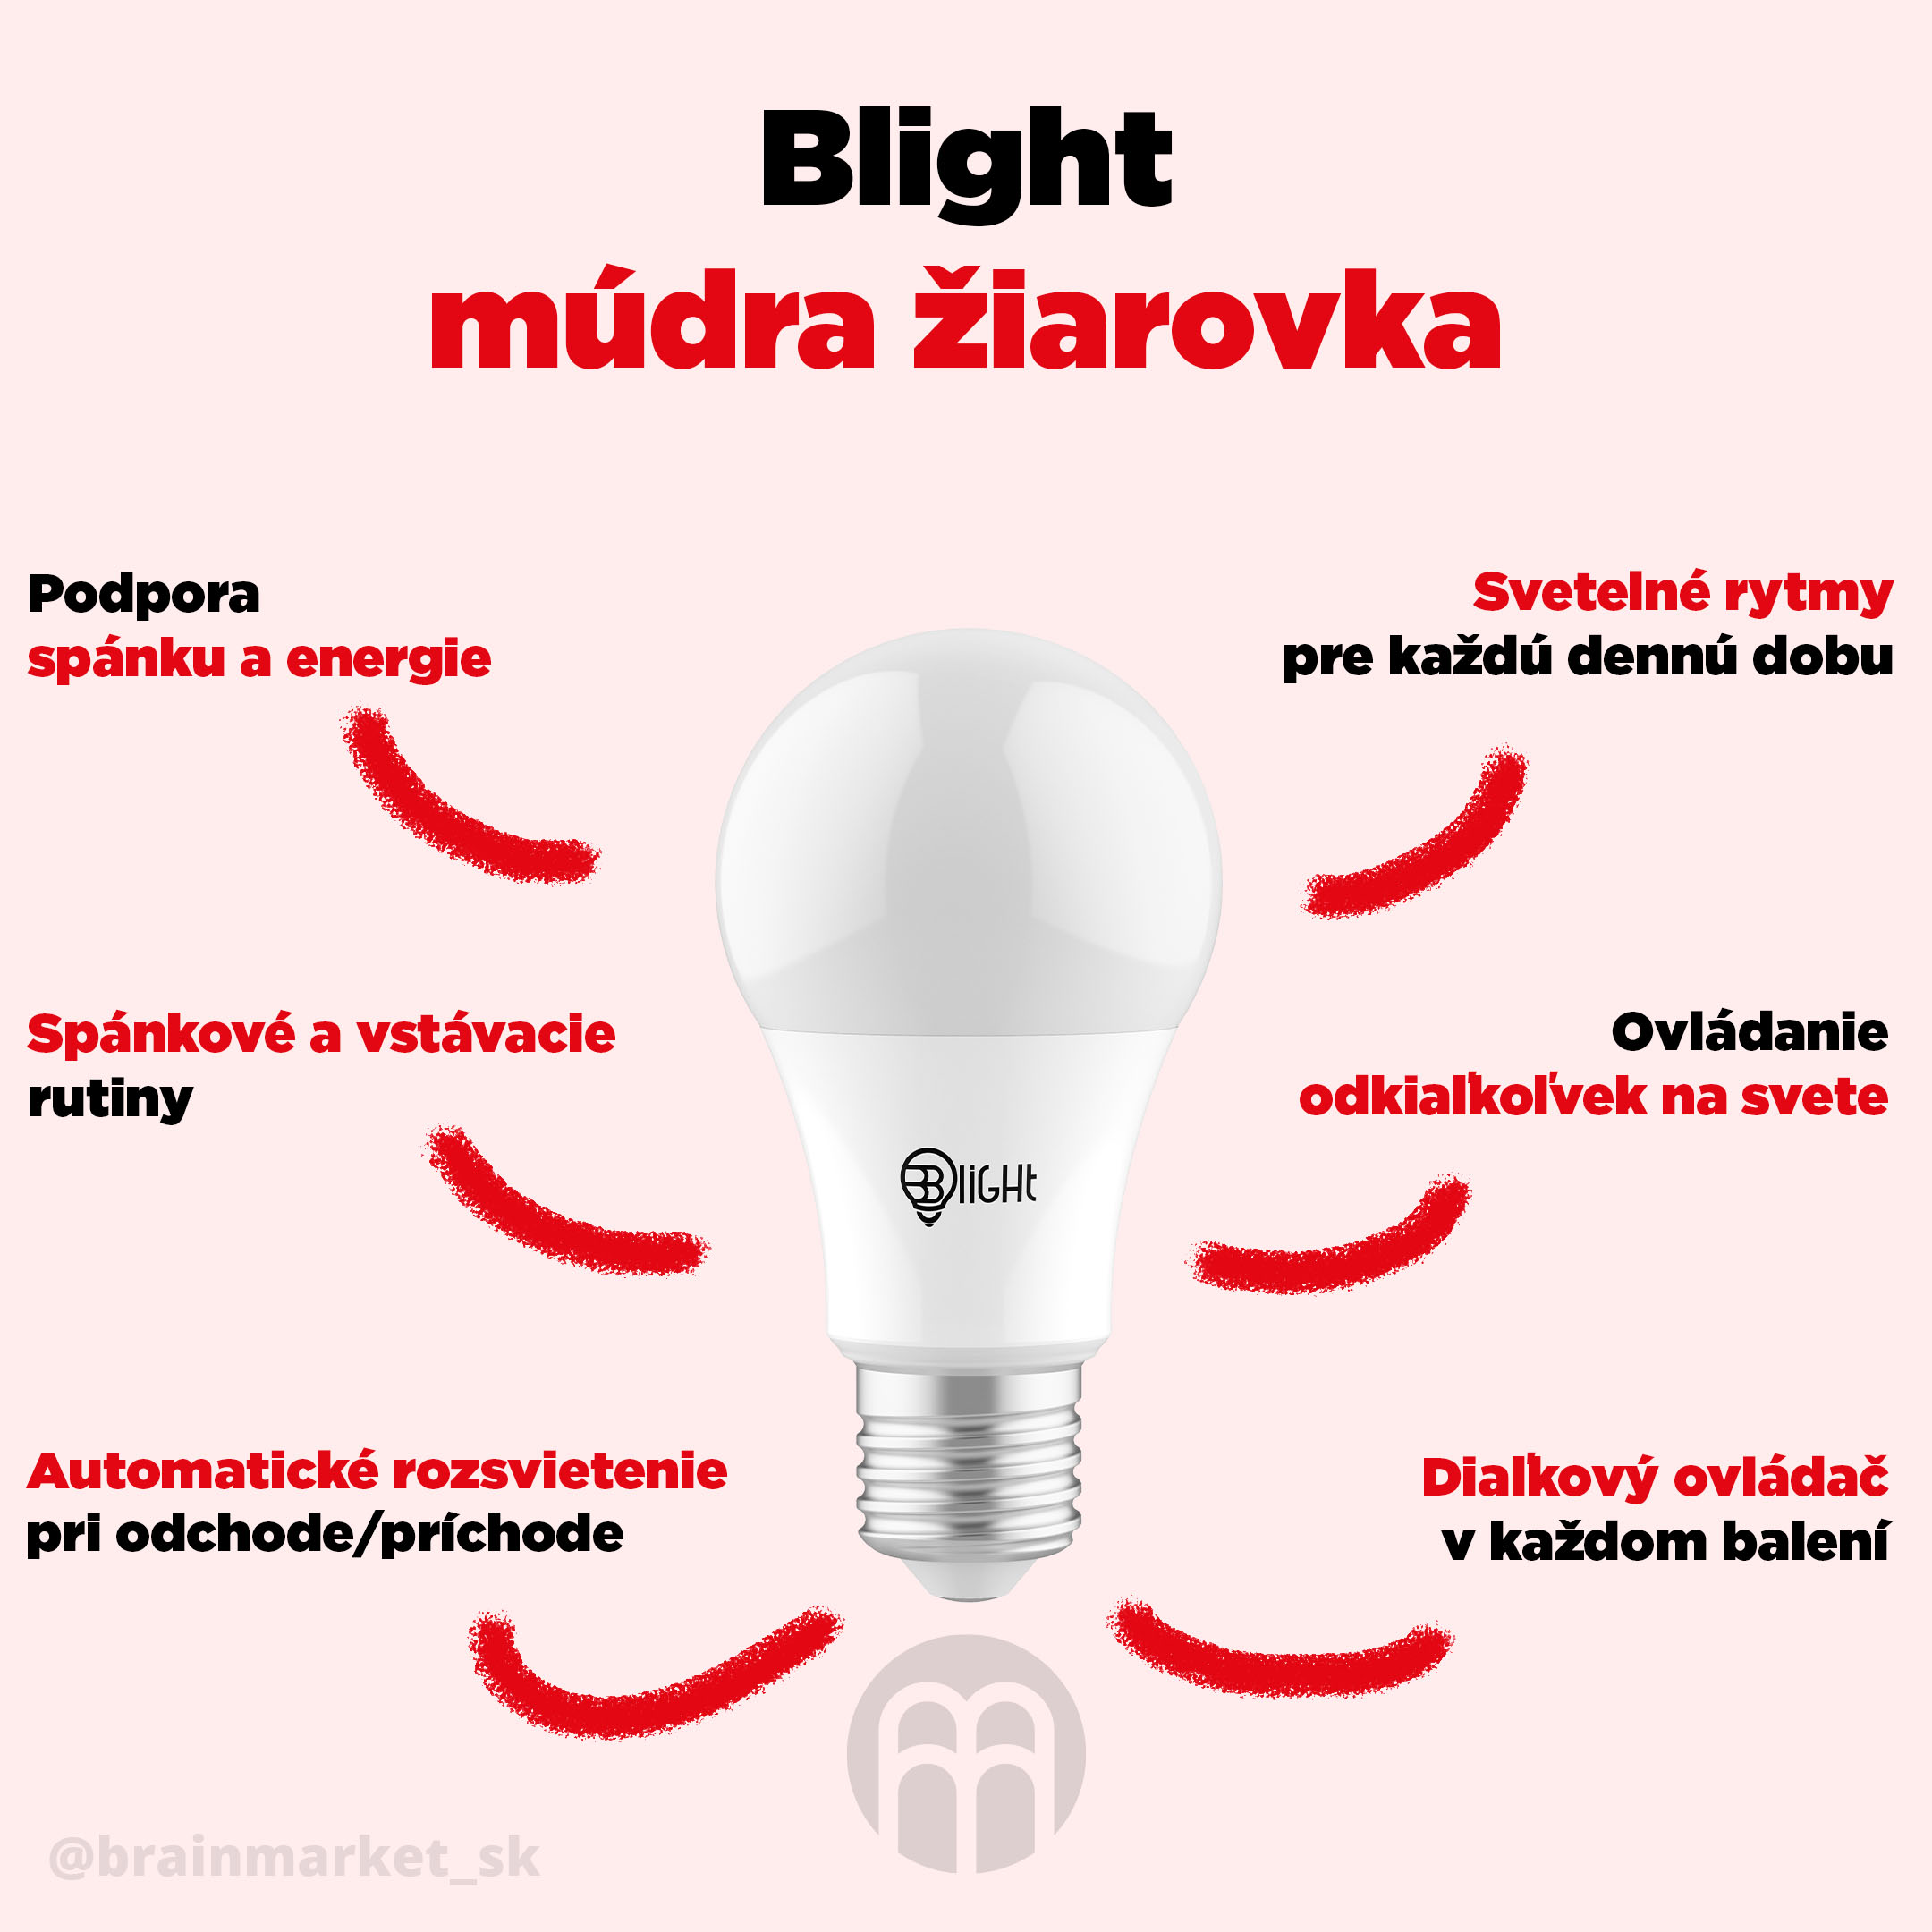 blight mudra ziarovka infografika brainmarket SK